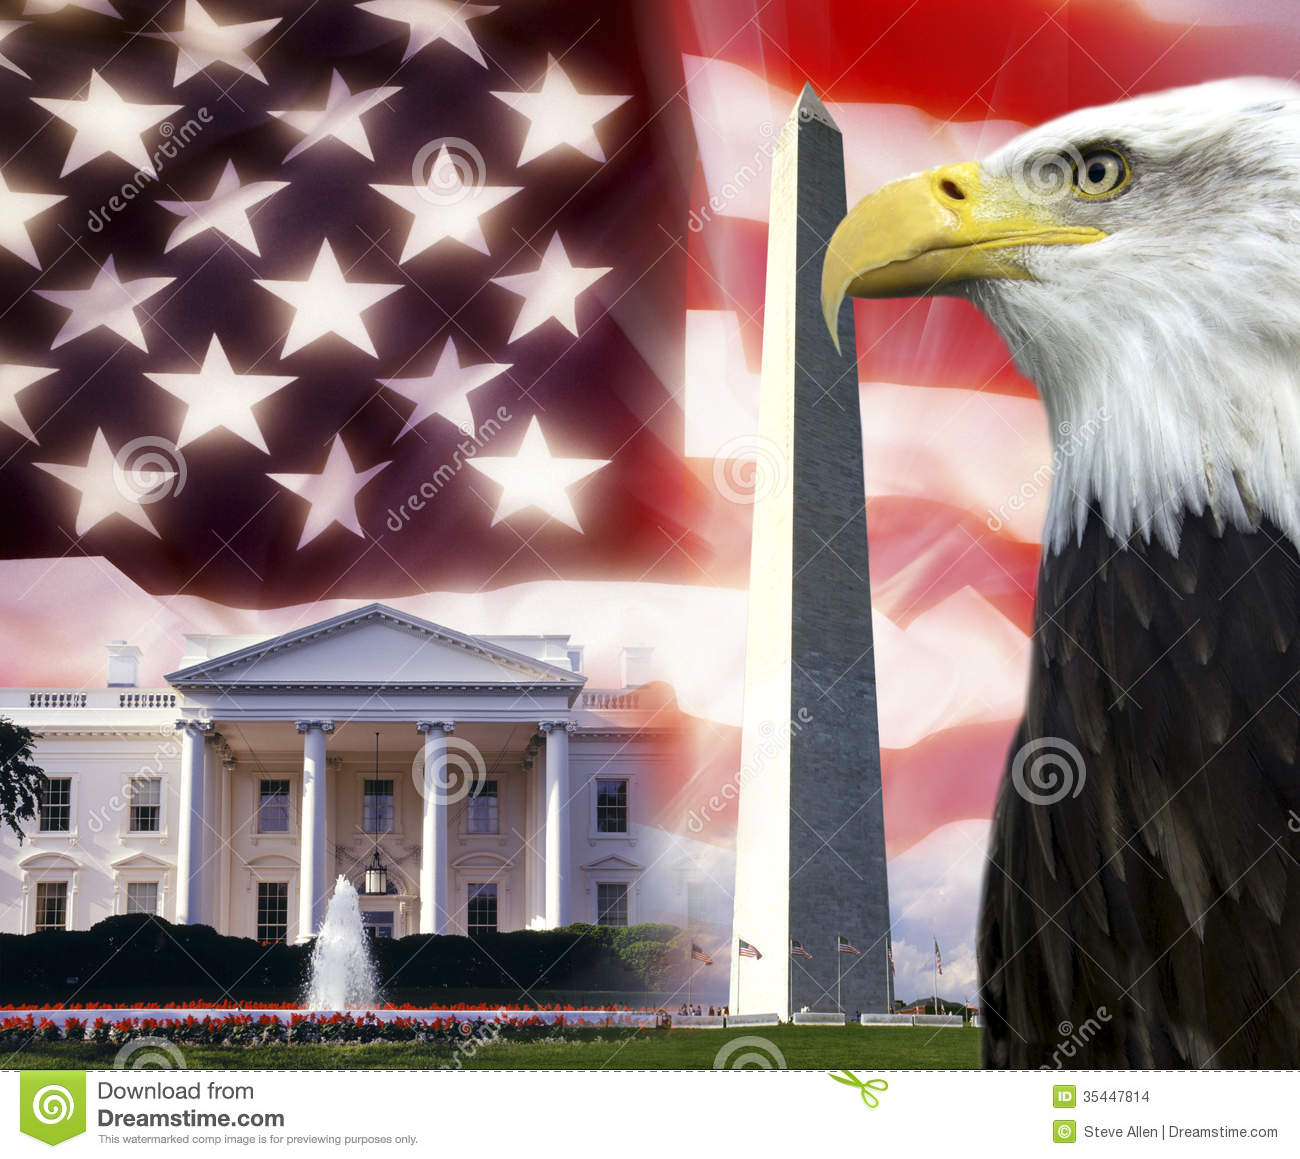     Clip Art Displaying 17 Images For American Patriotic Symbols Clip Art